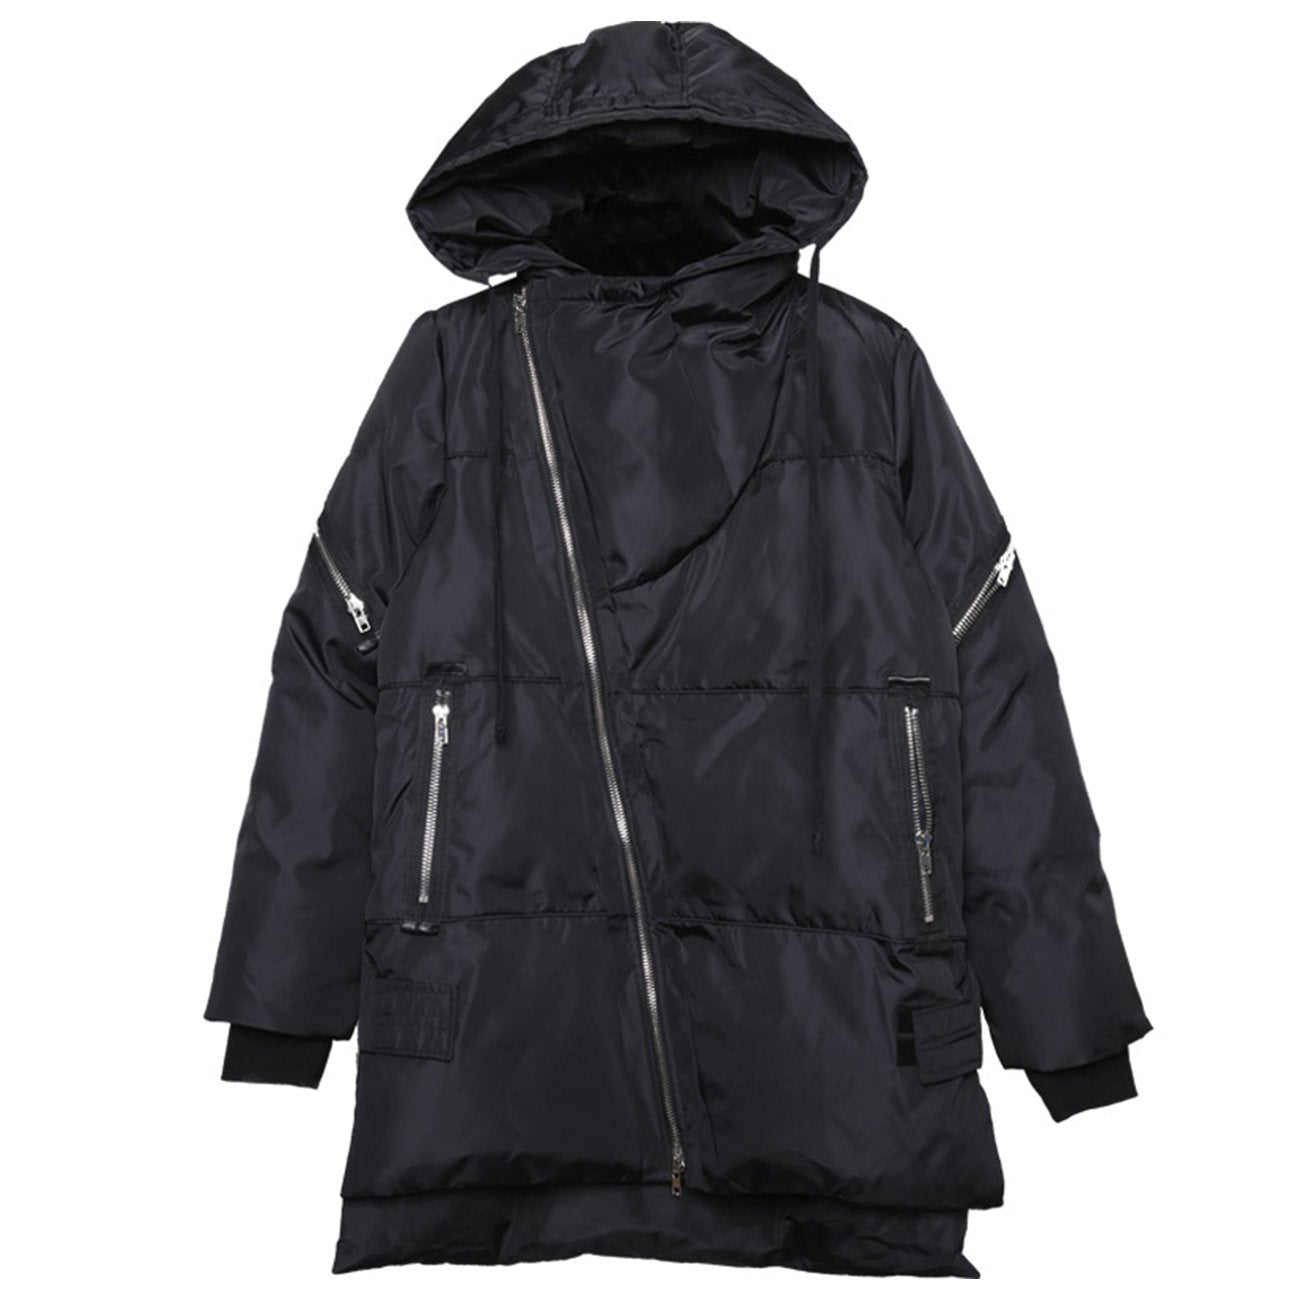 WLS Personalized Diagonal Zipper Winter Coat